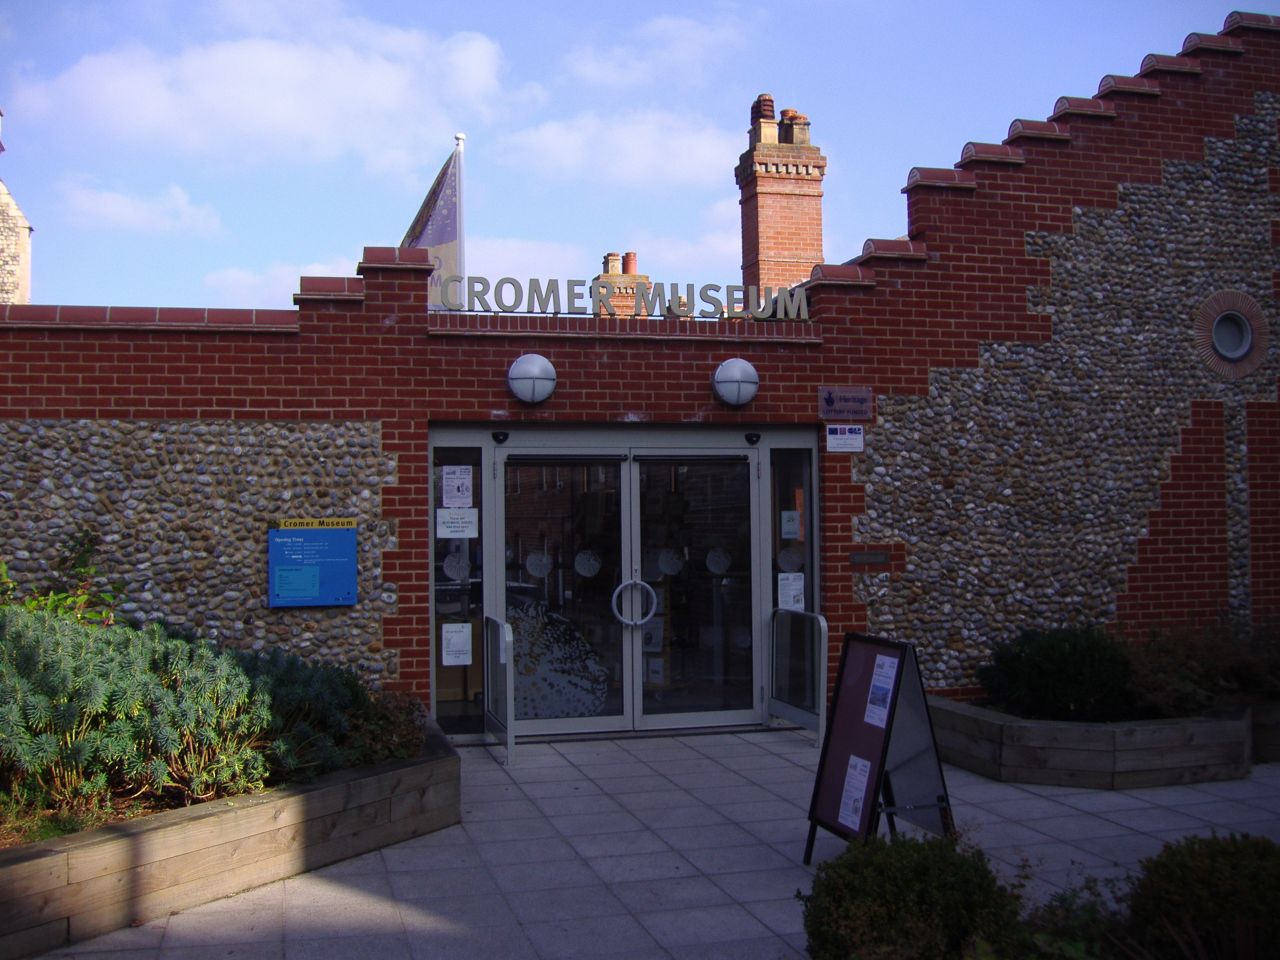 cromer tourist information centre